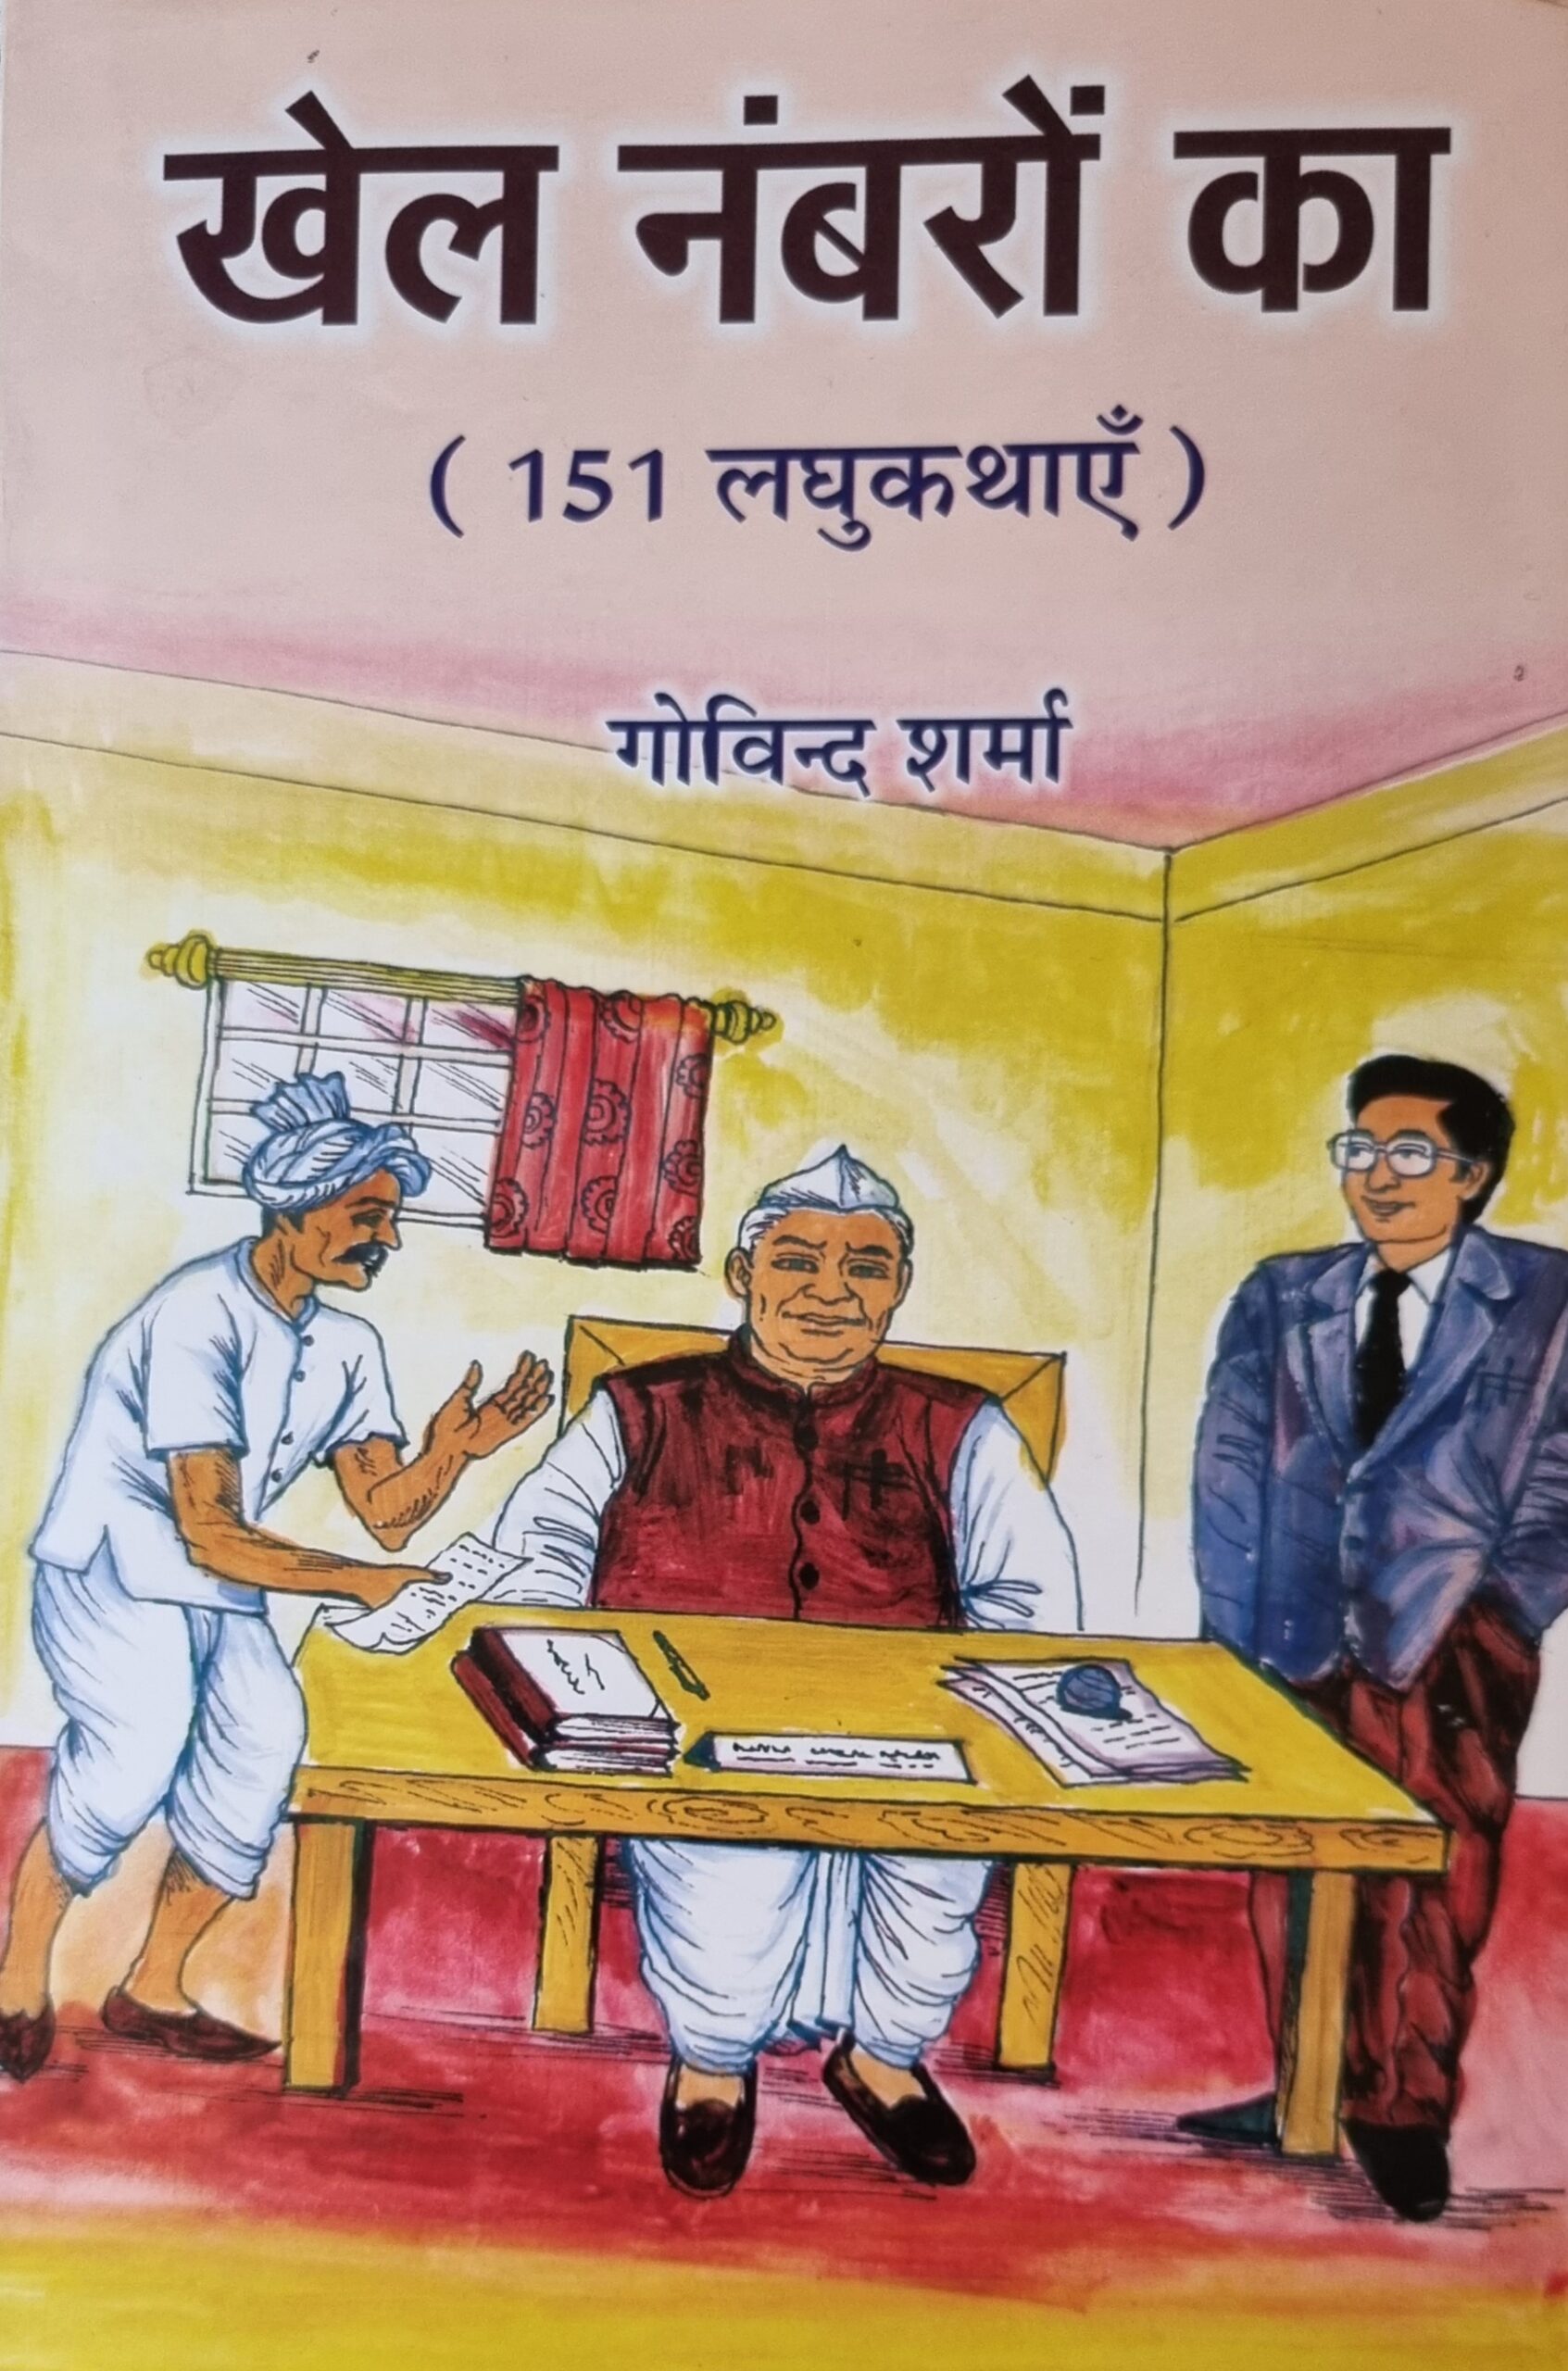 Khel Numberon ka (151 laghu kathayein) by Govind Sharma Book cover